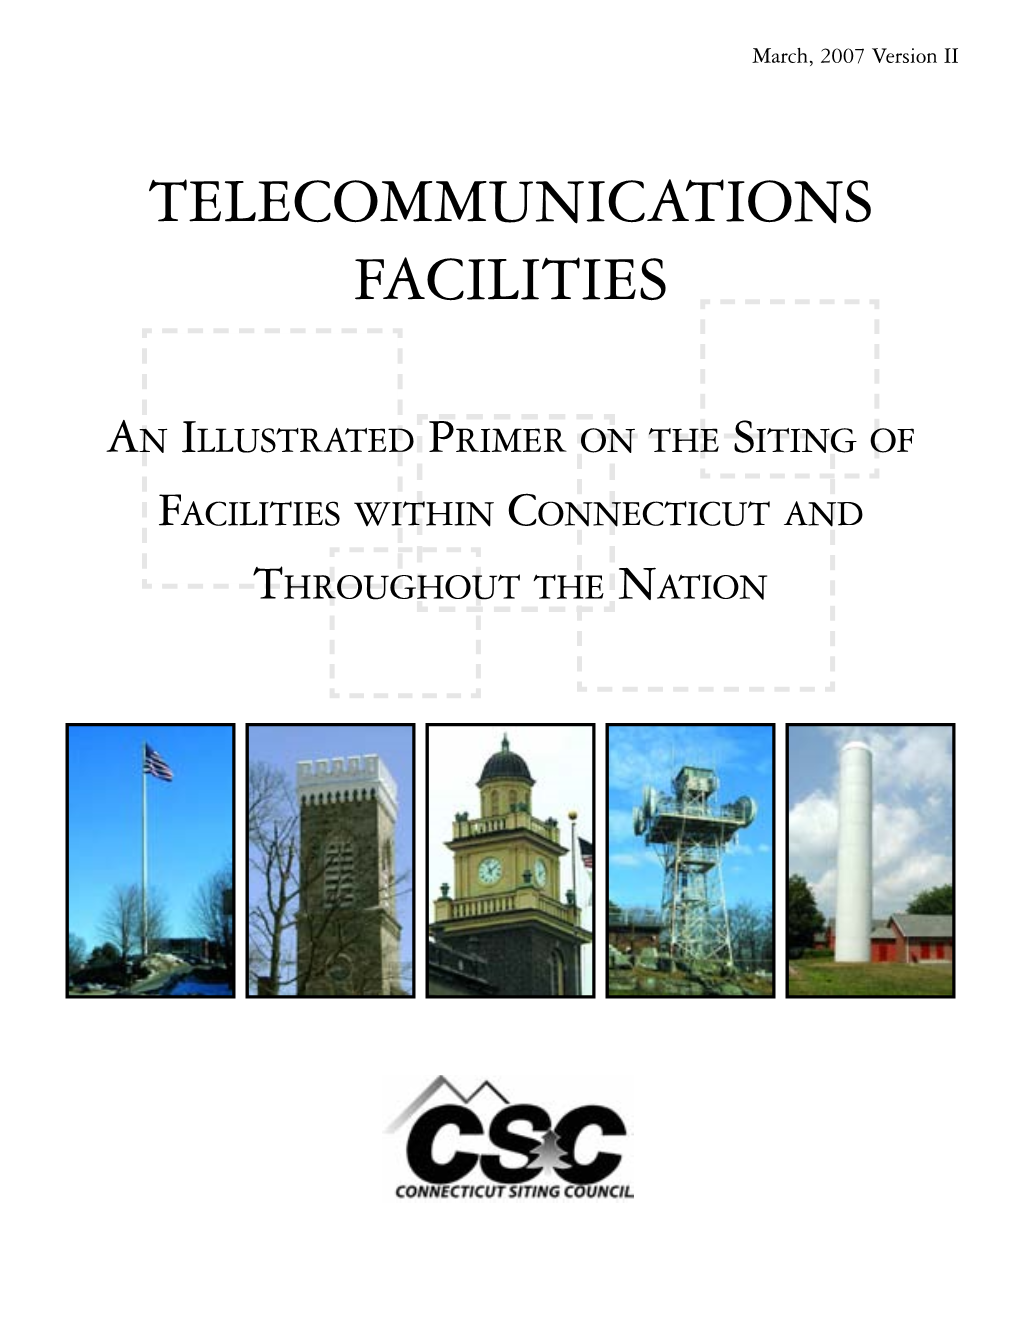 Telecommunications Facilities